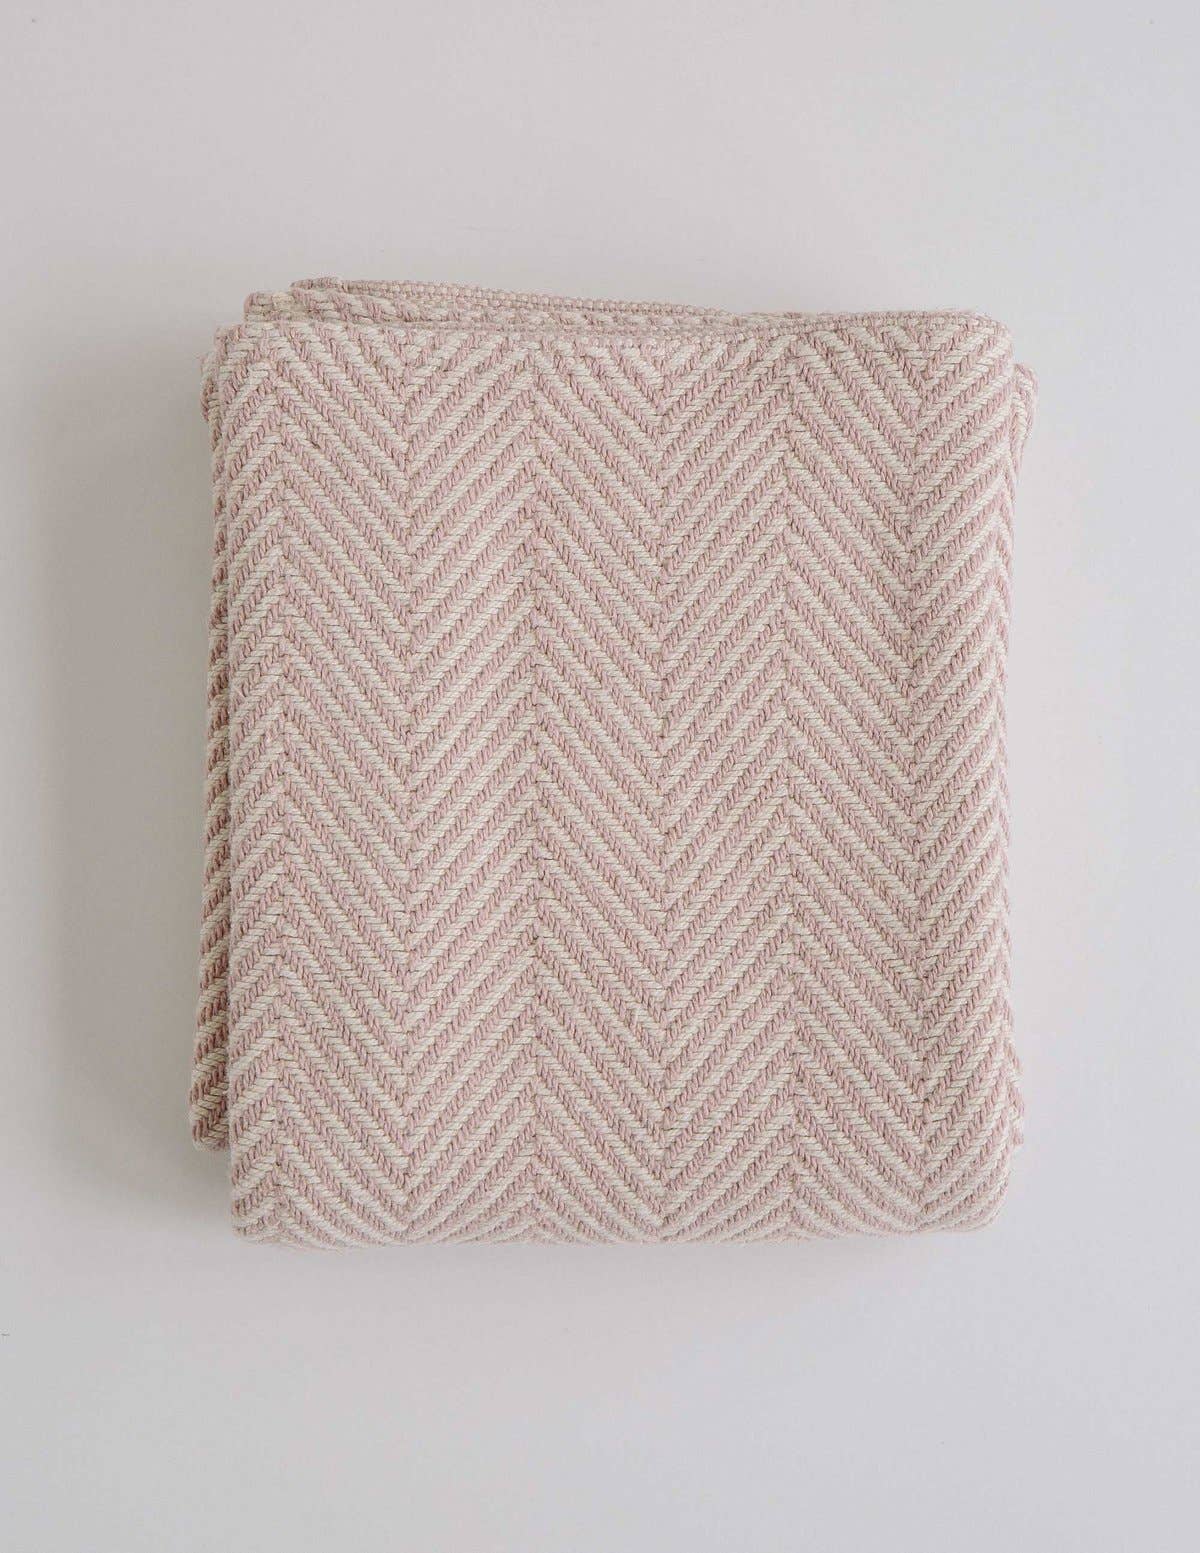 herringbone stitch pattern on baby blanket in blush color